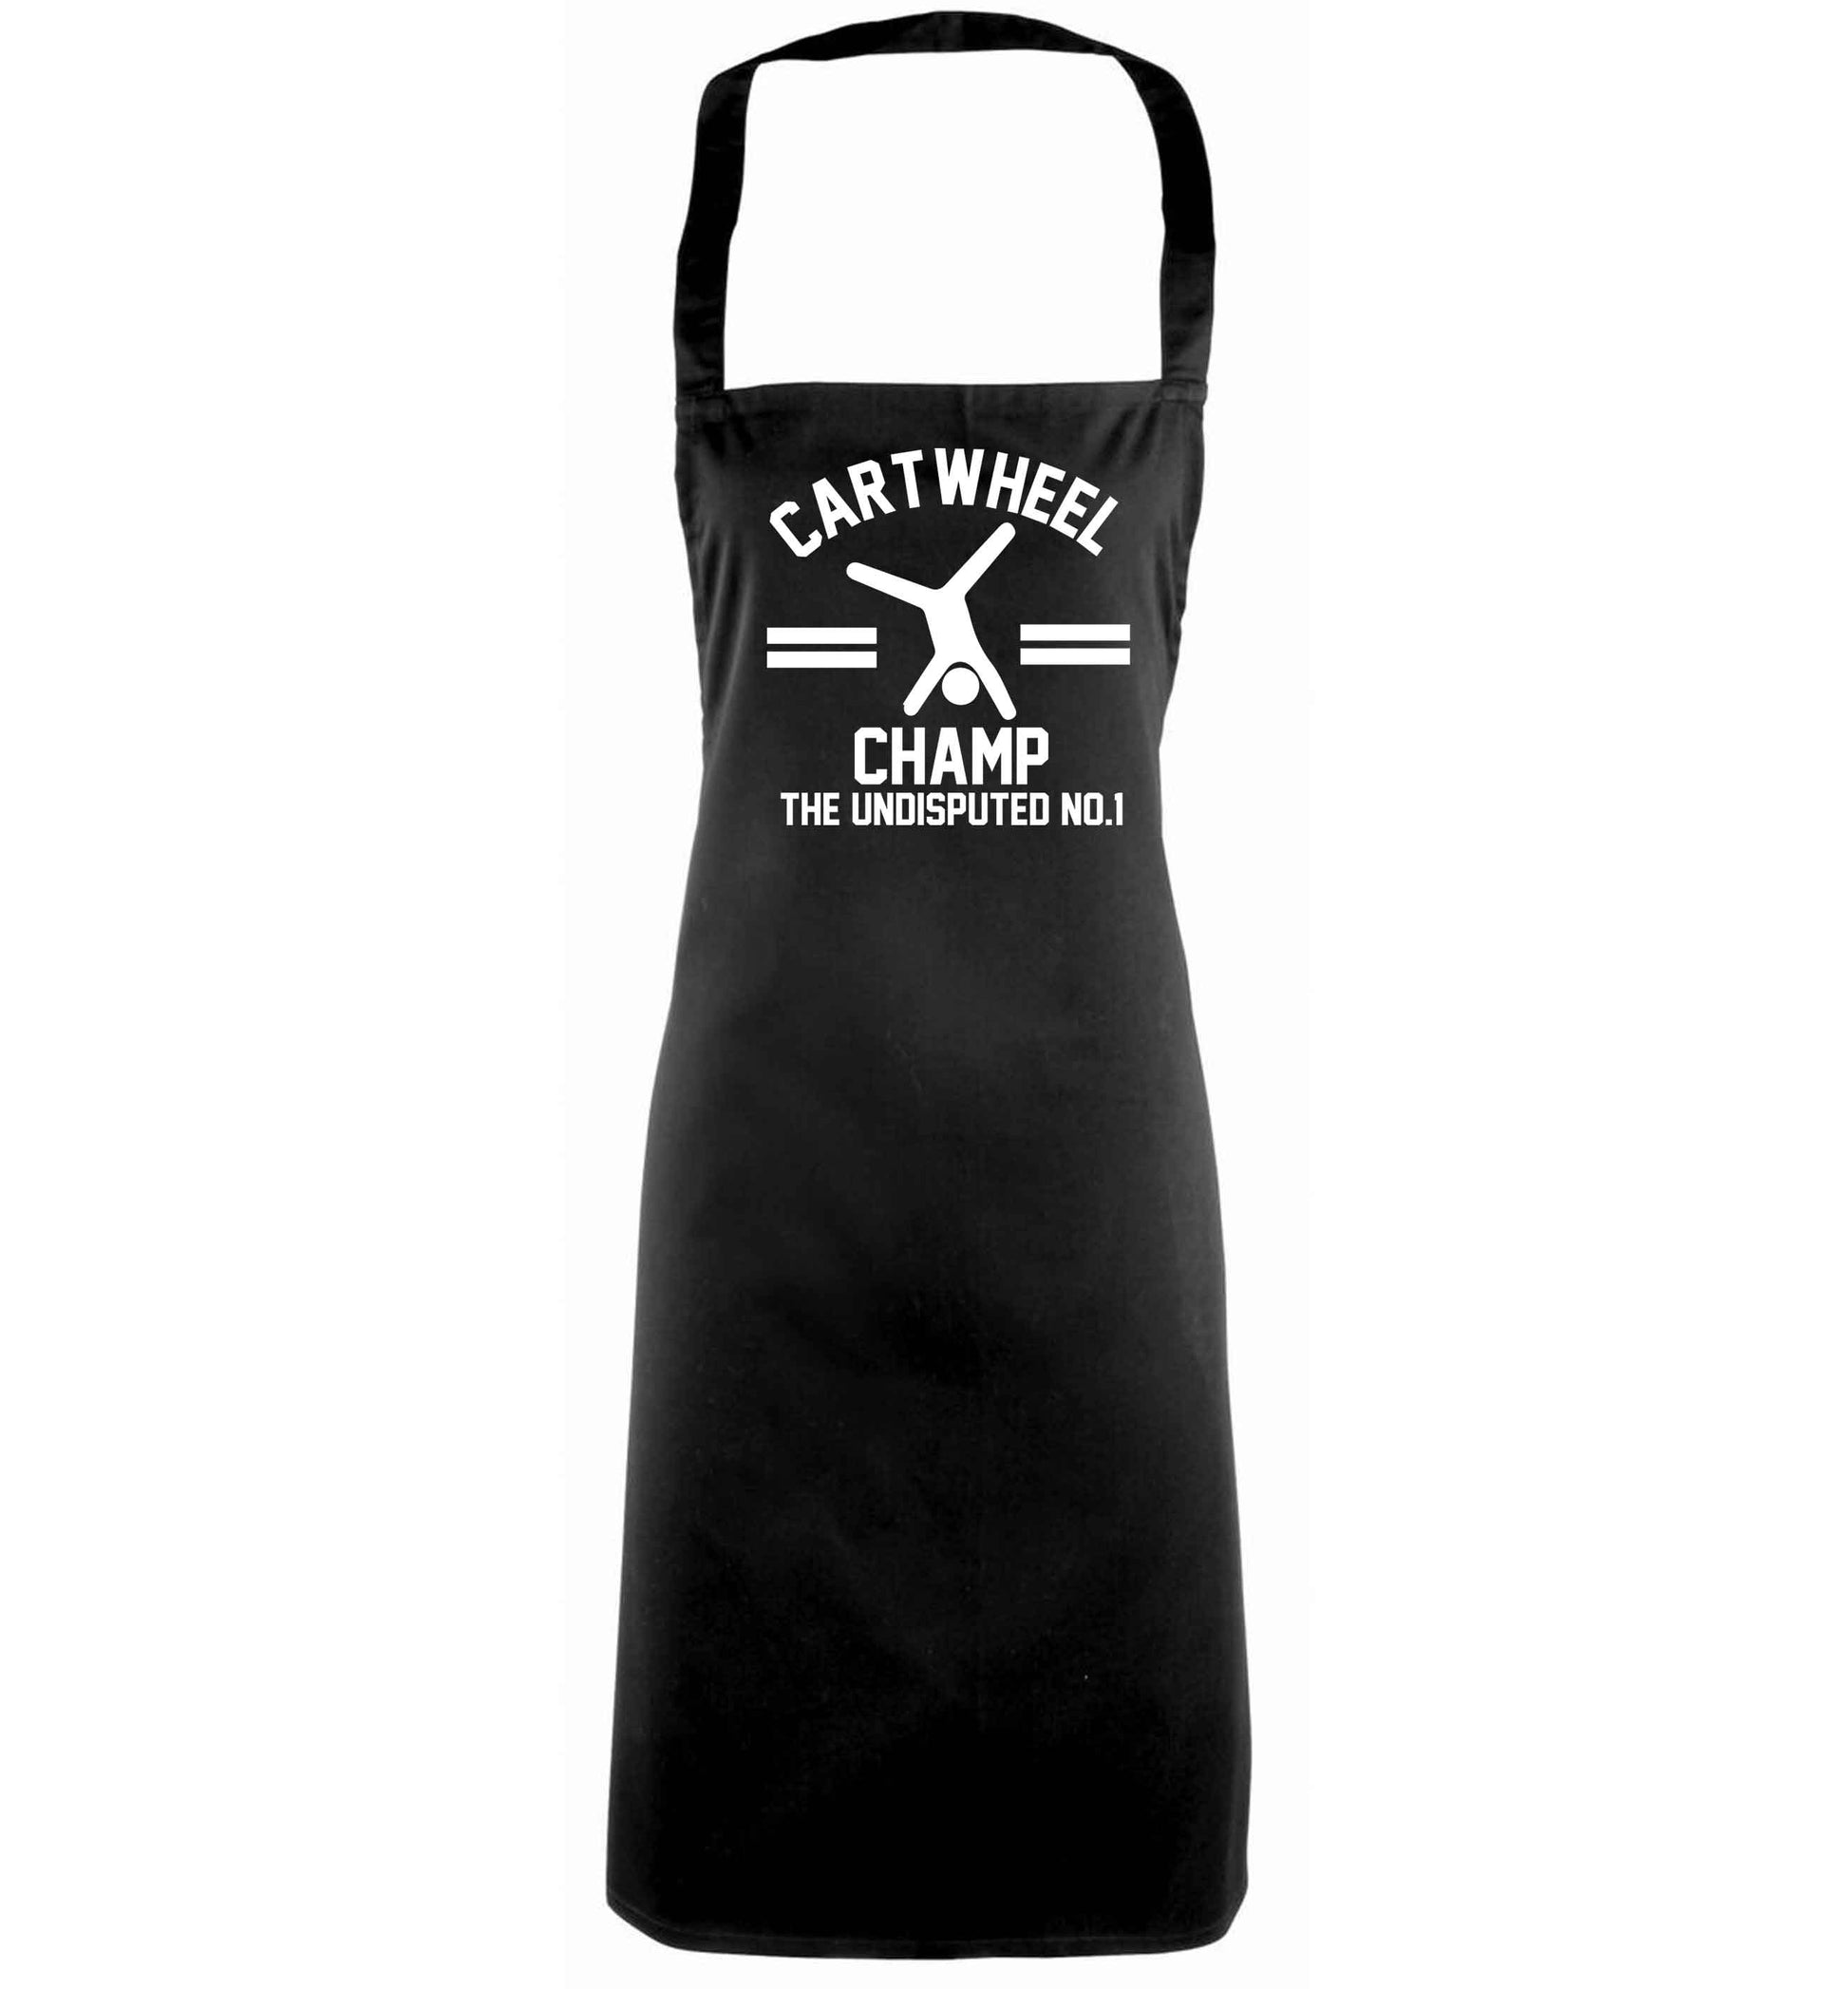 Undisputed cartwheel championship no.1  black apron